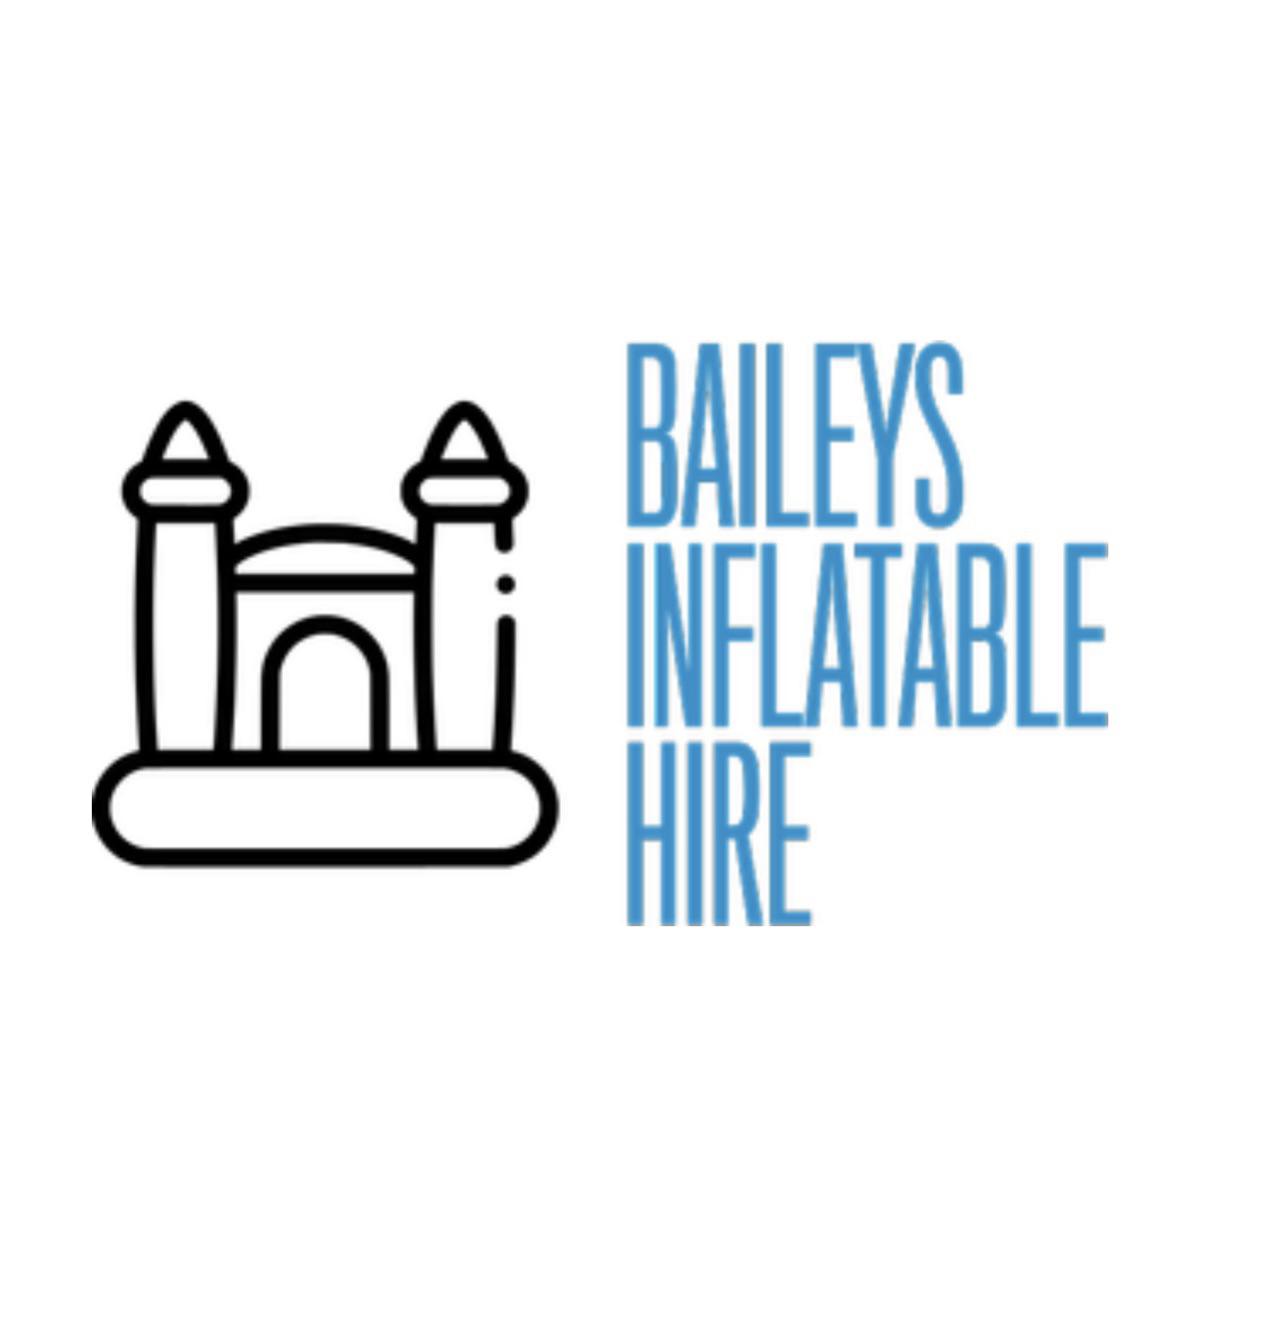 Baileys Inflatable Hire Logo